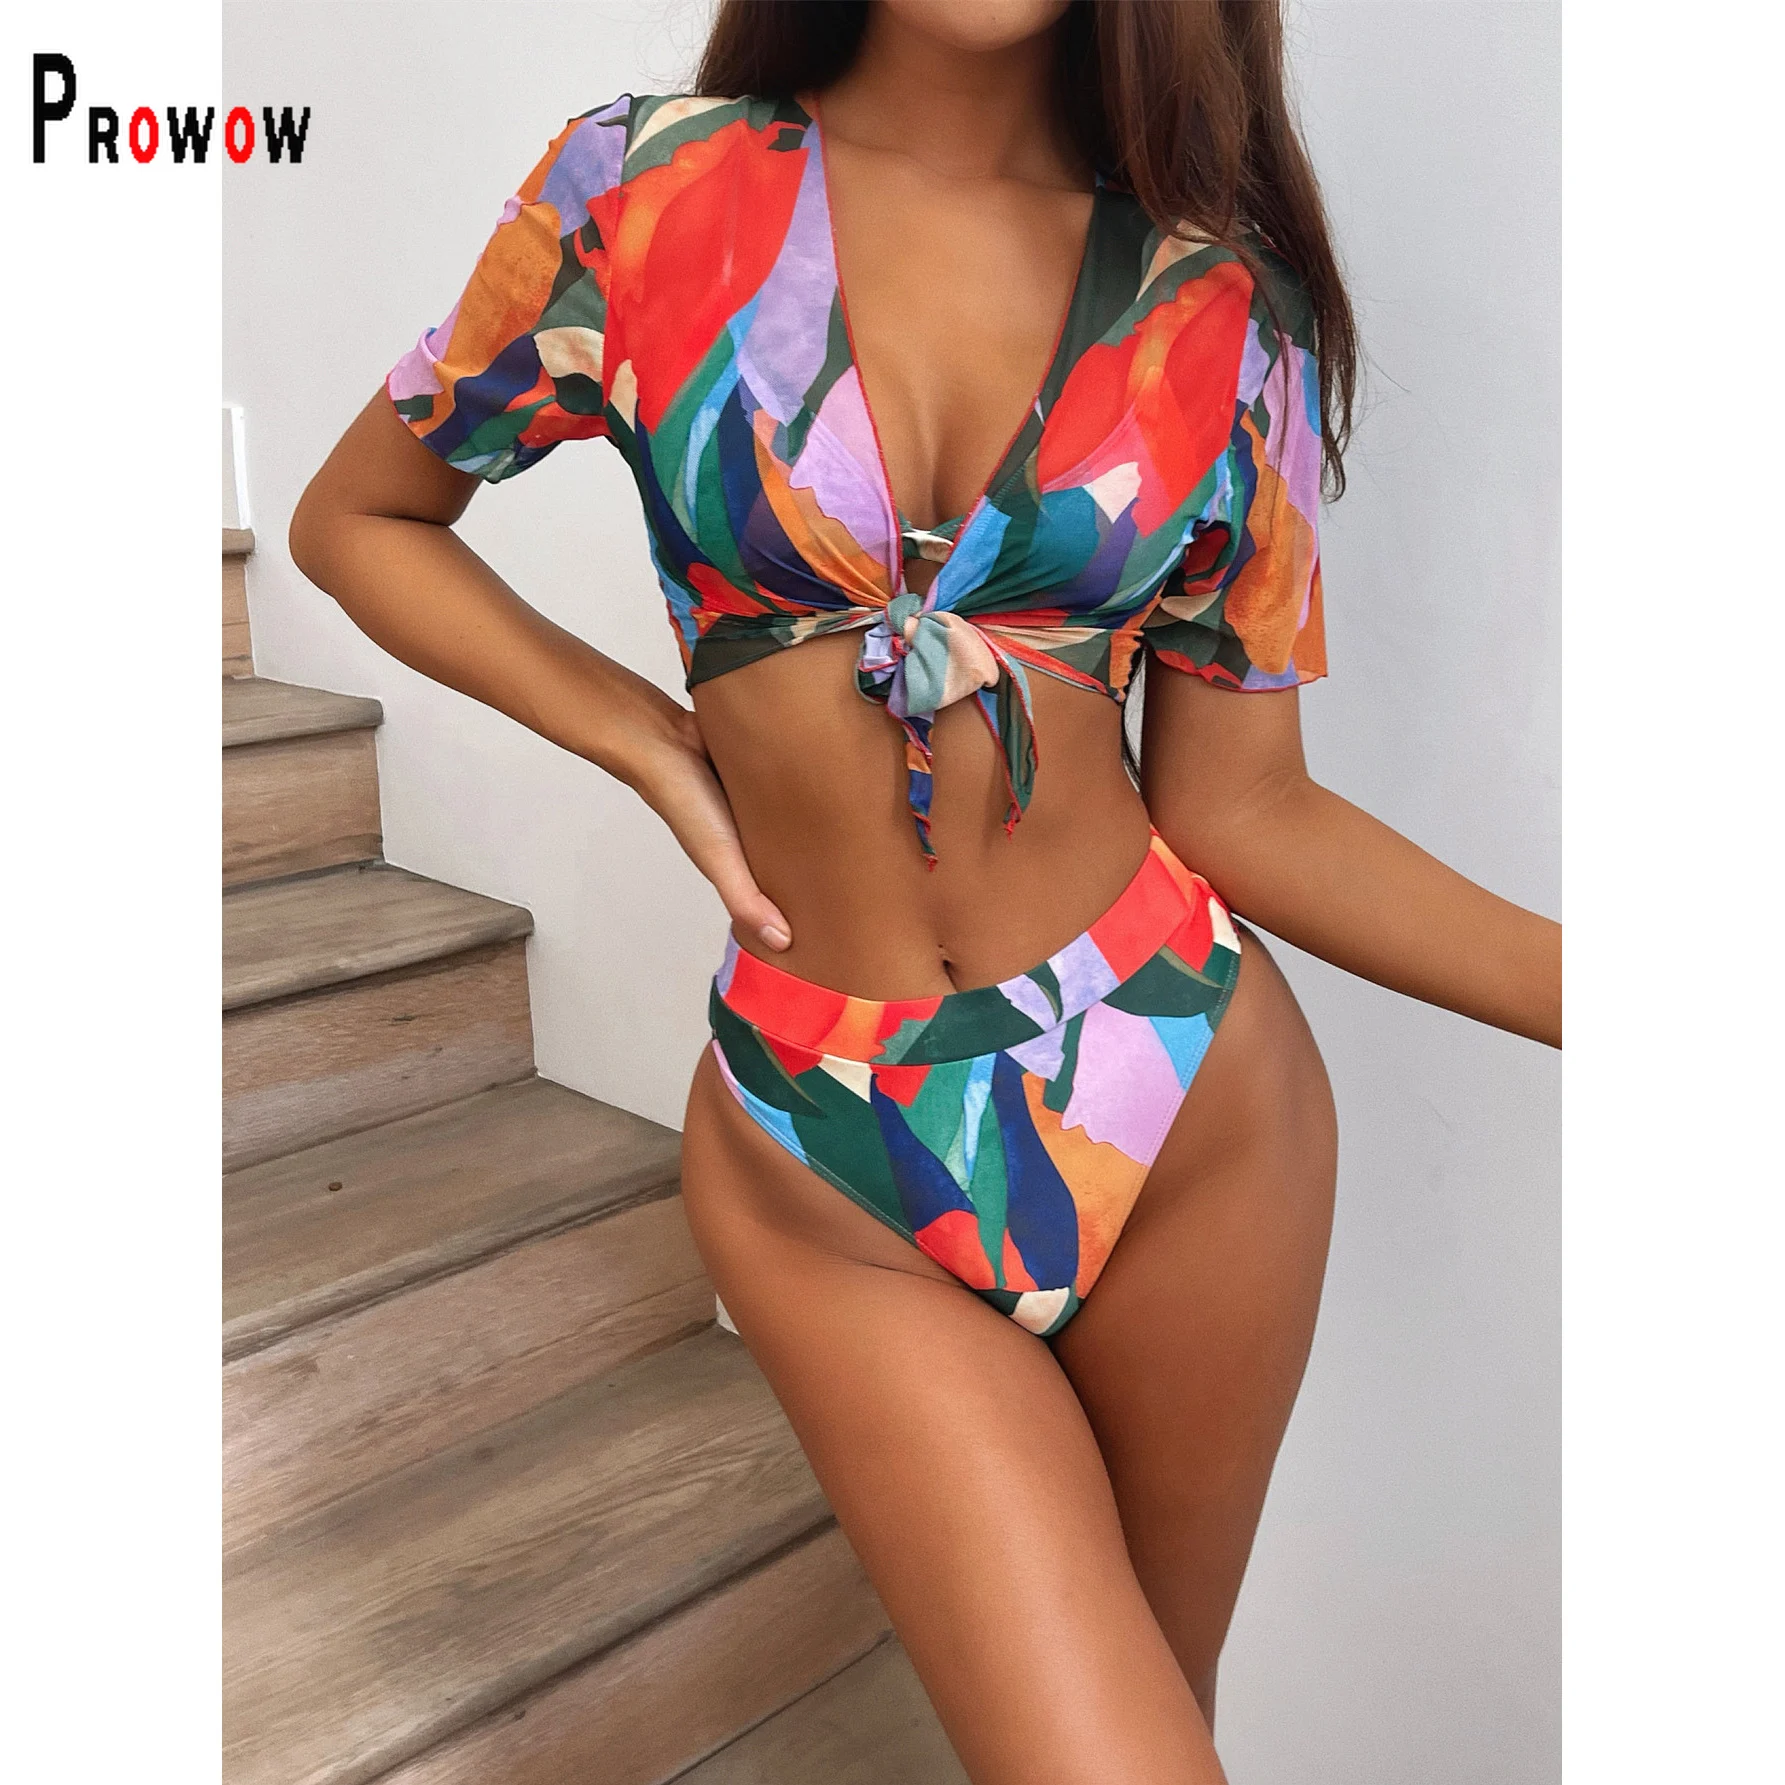 

Prowow Women Bikini Set Cover-ups Push Up Bra High Waisted Panty 3pcs Swimsuit Fashion Print Bathing Suits Beachwear Outfits